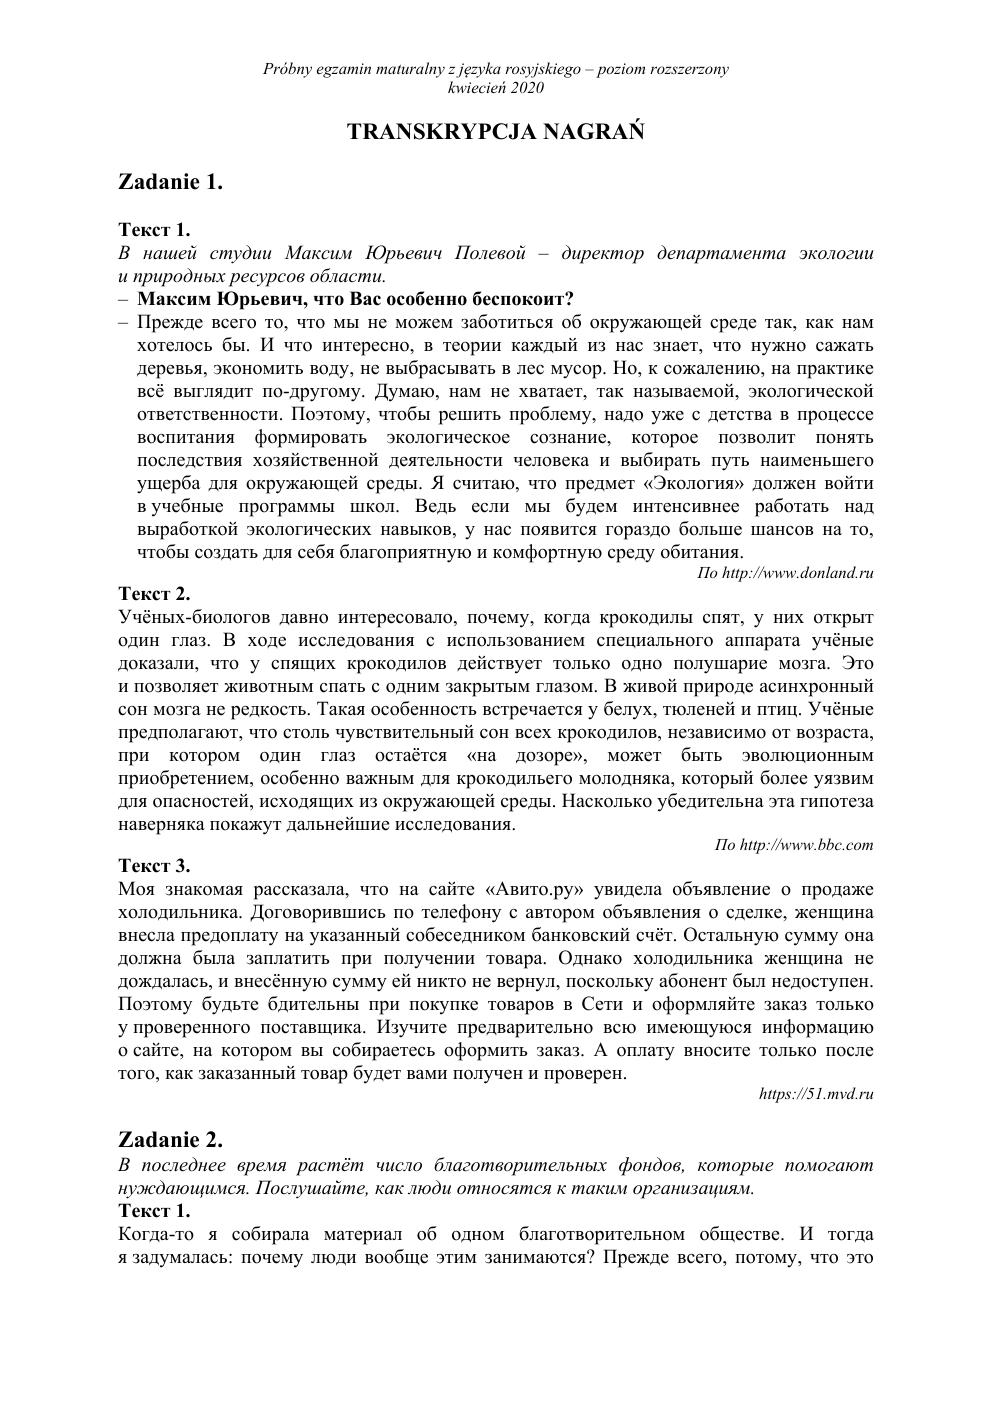 transkrypcja - rosyjski rozszerzony - matura 2020 próbna-1